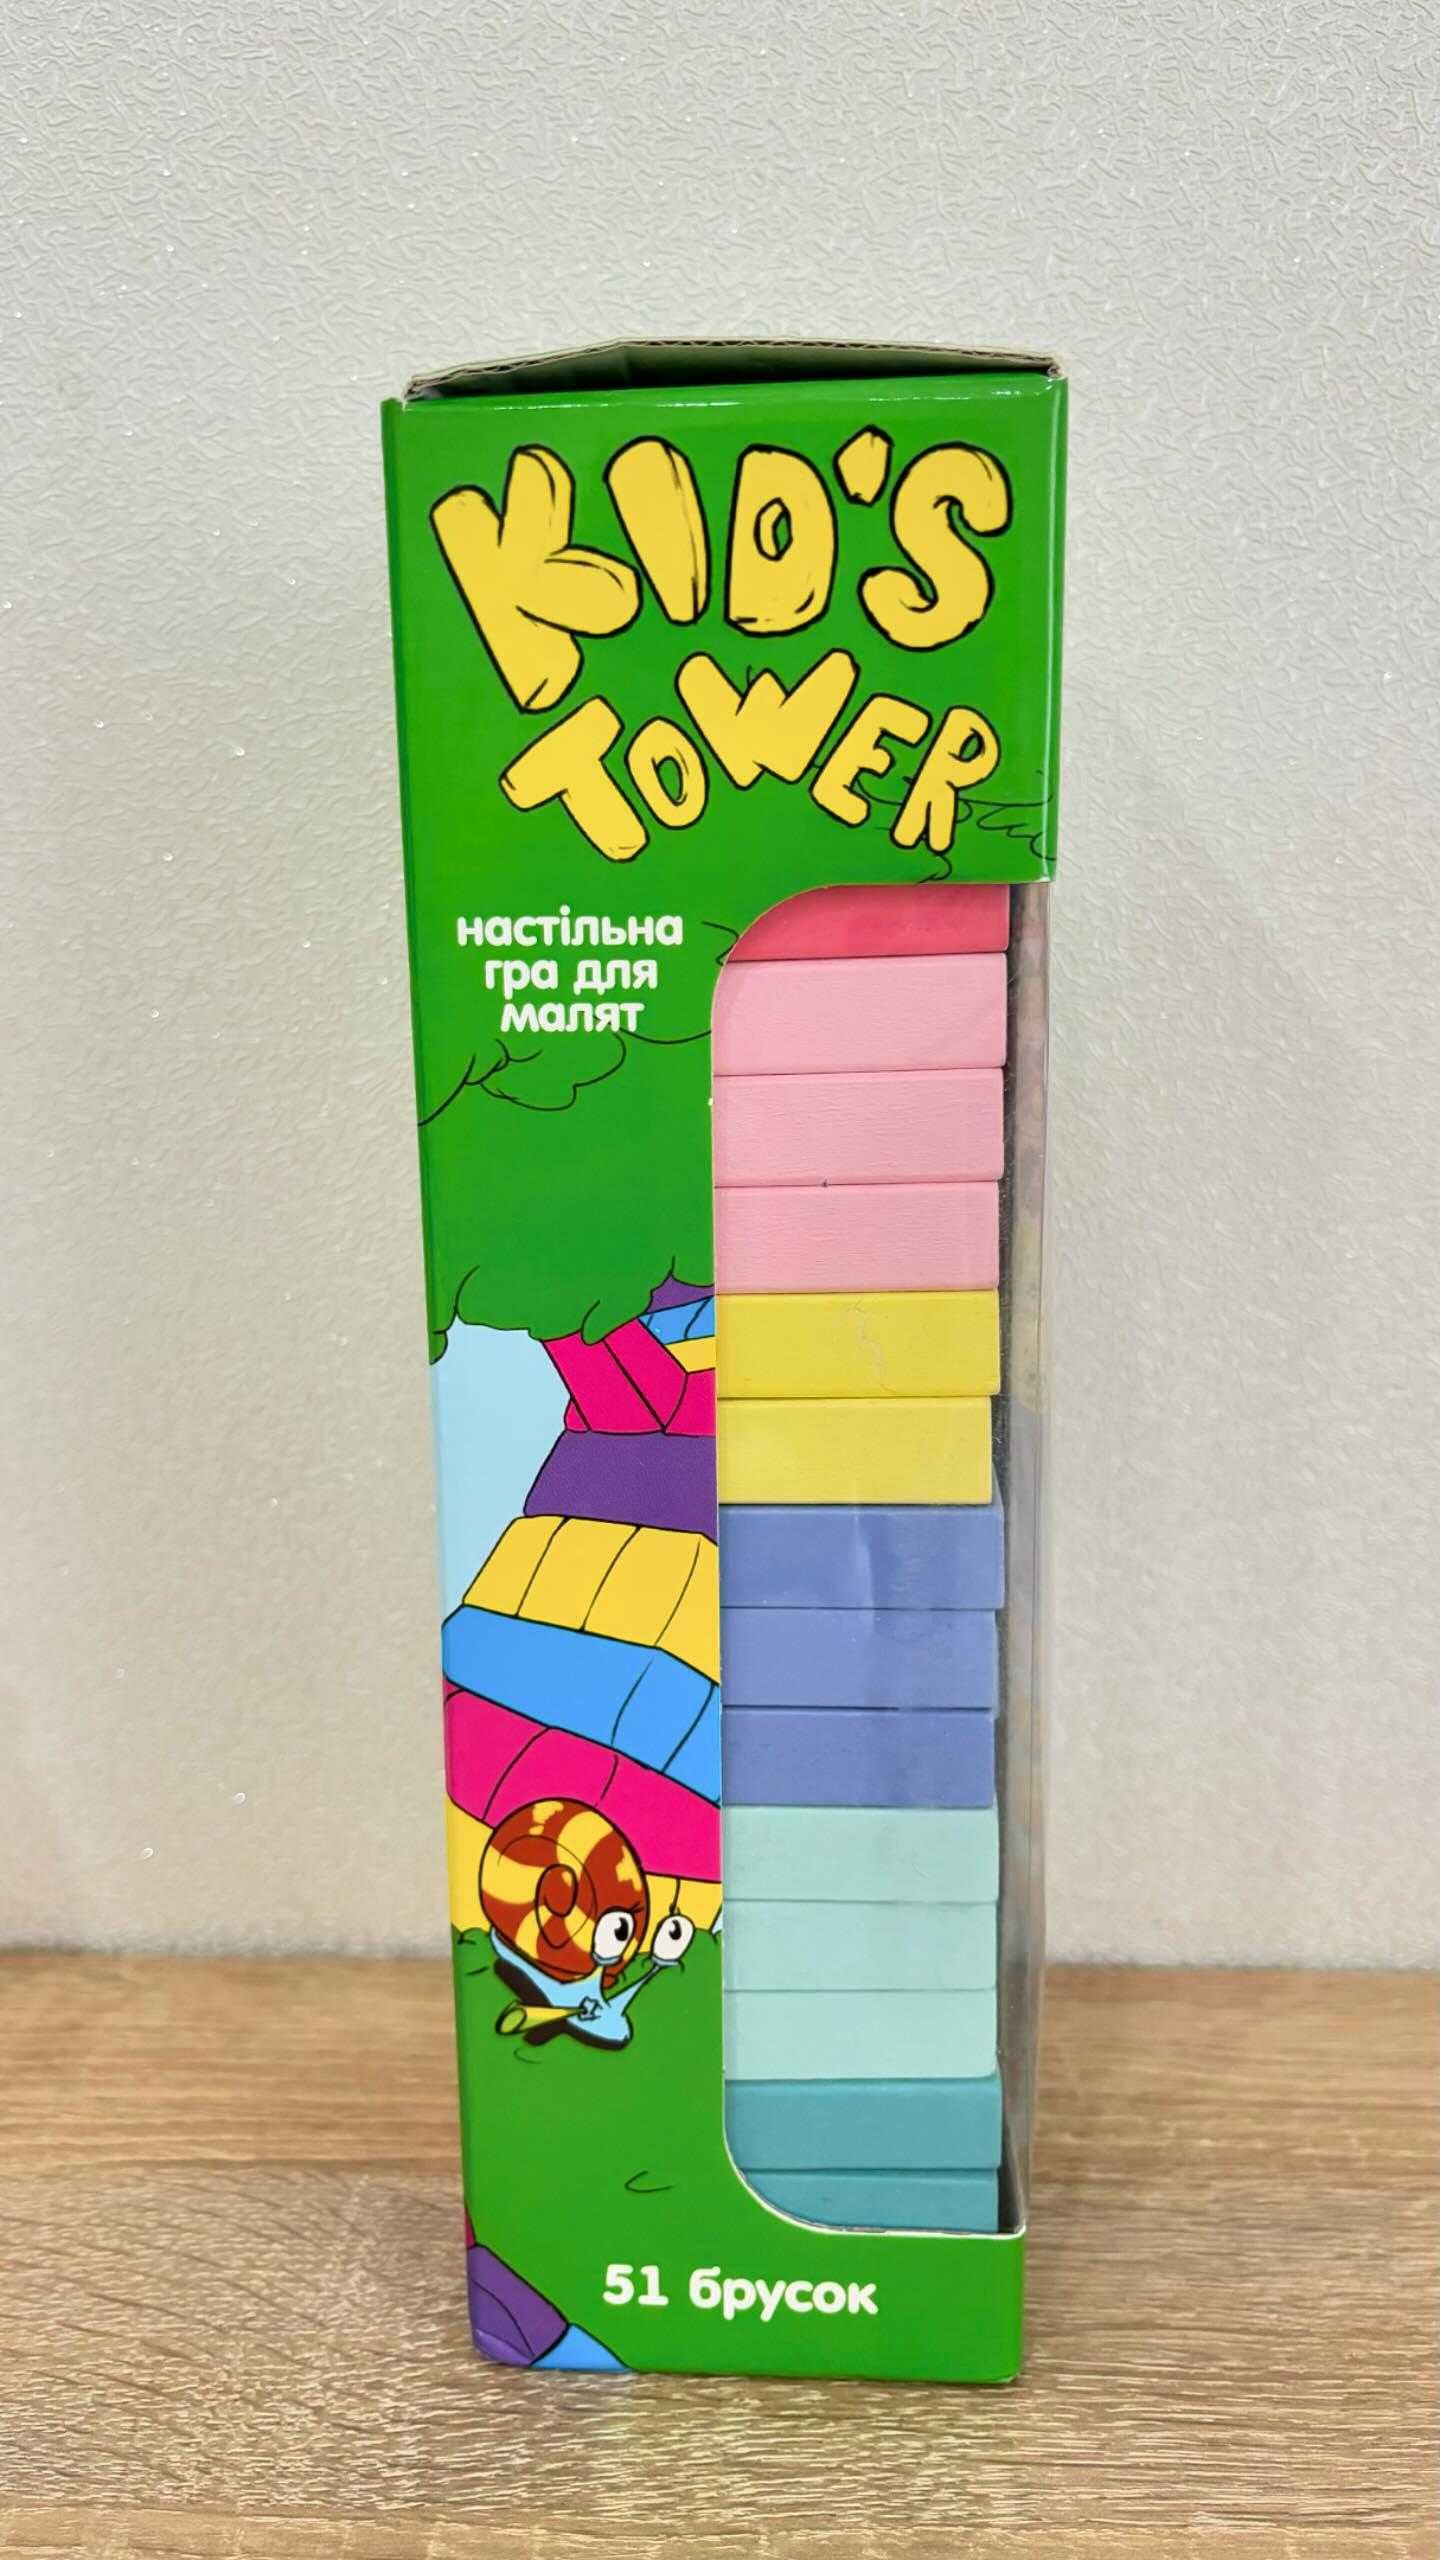 Продам нову гру Дженга Kid's tower